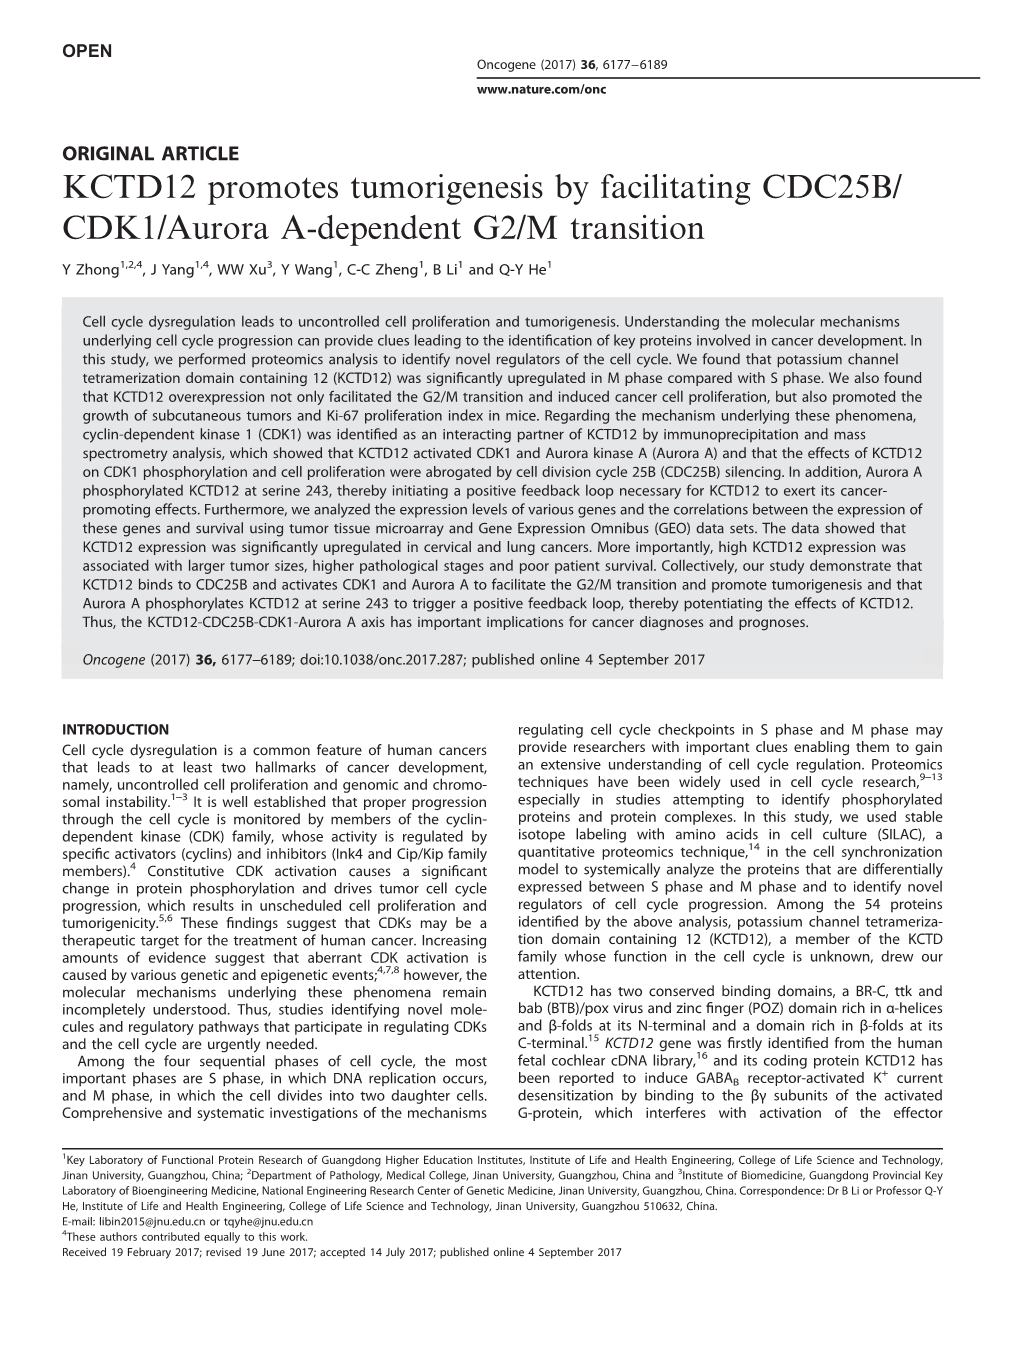 KCTD12 Promotes Tumorigenesis by Facilitating CDC25B/CDK1/Aurora A